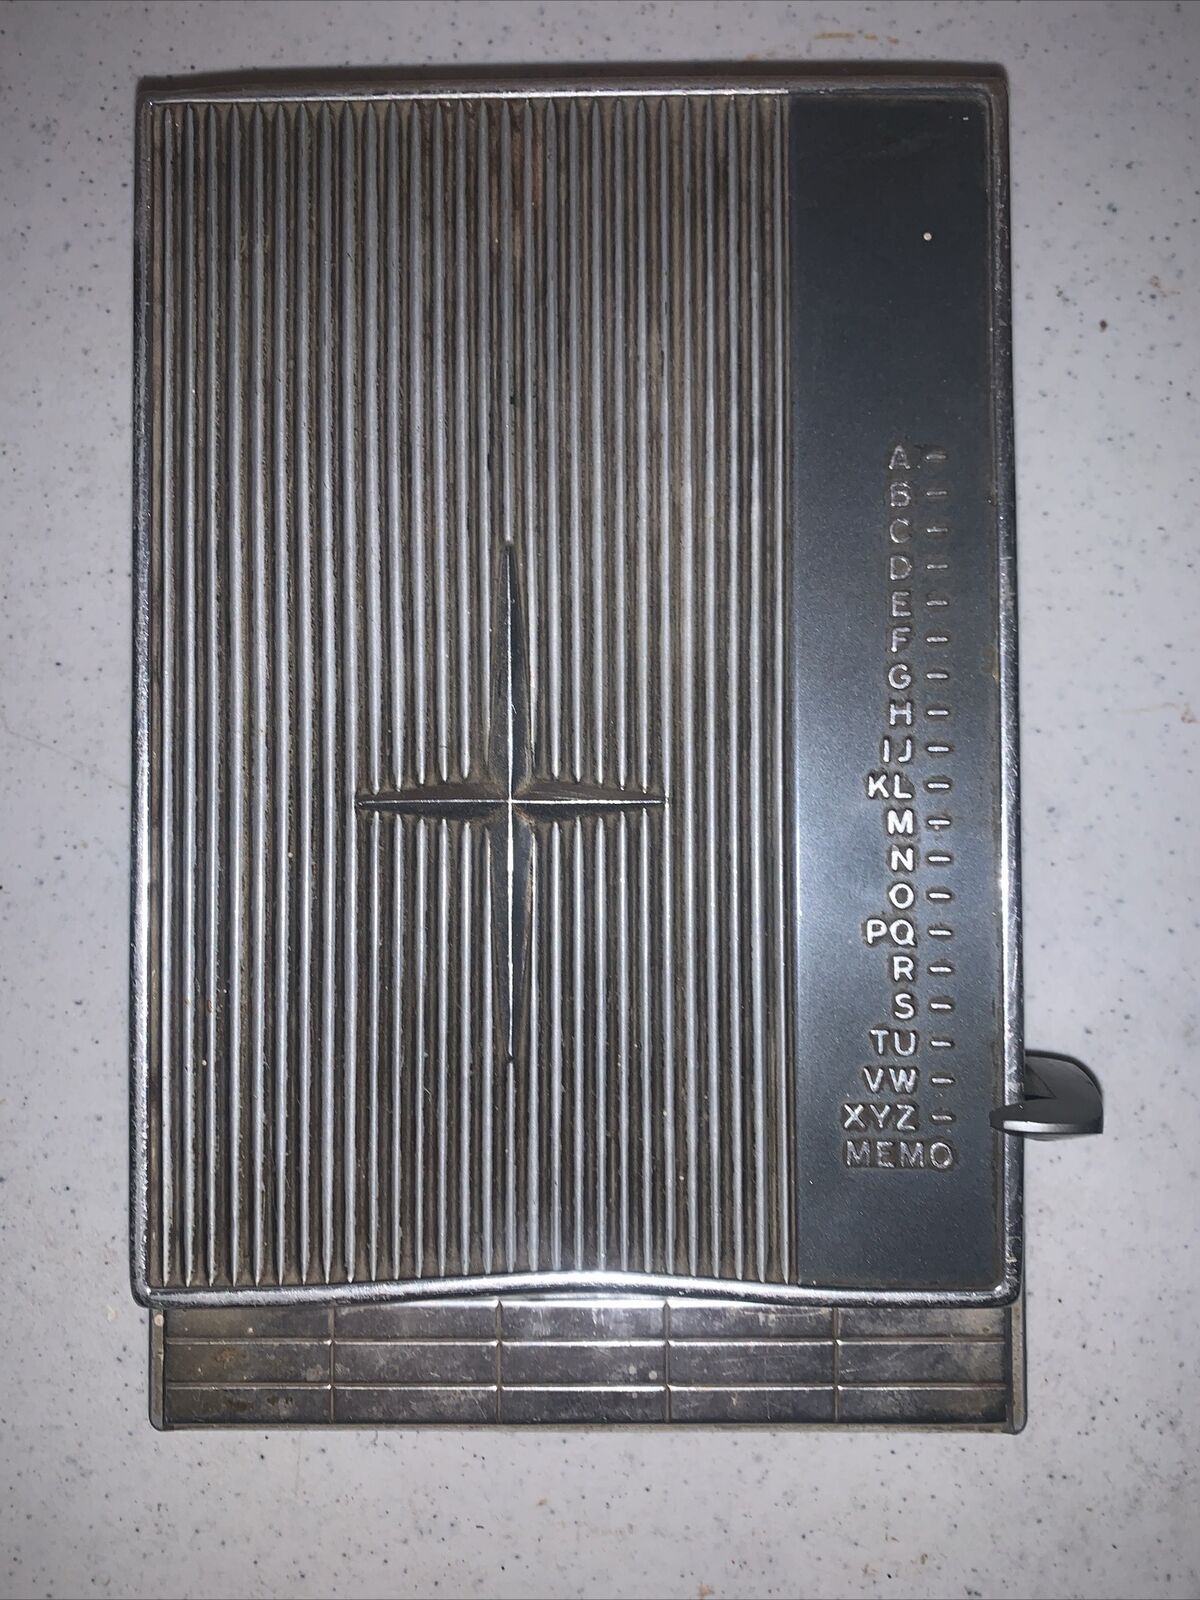 Vintage Autodex Starflite Zephyr American Corp. Model Number S-800 Rolodex